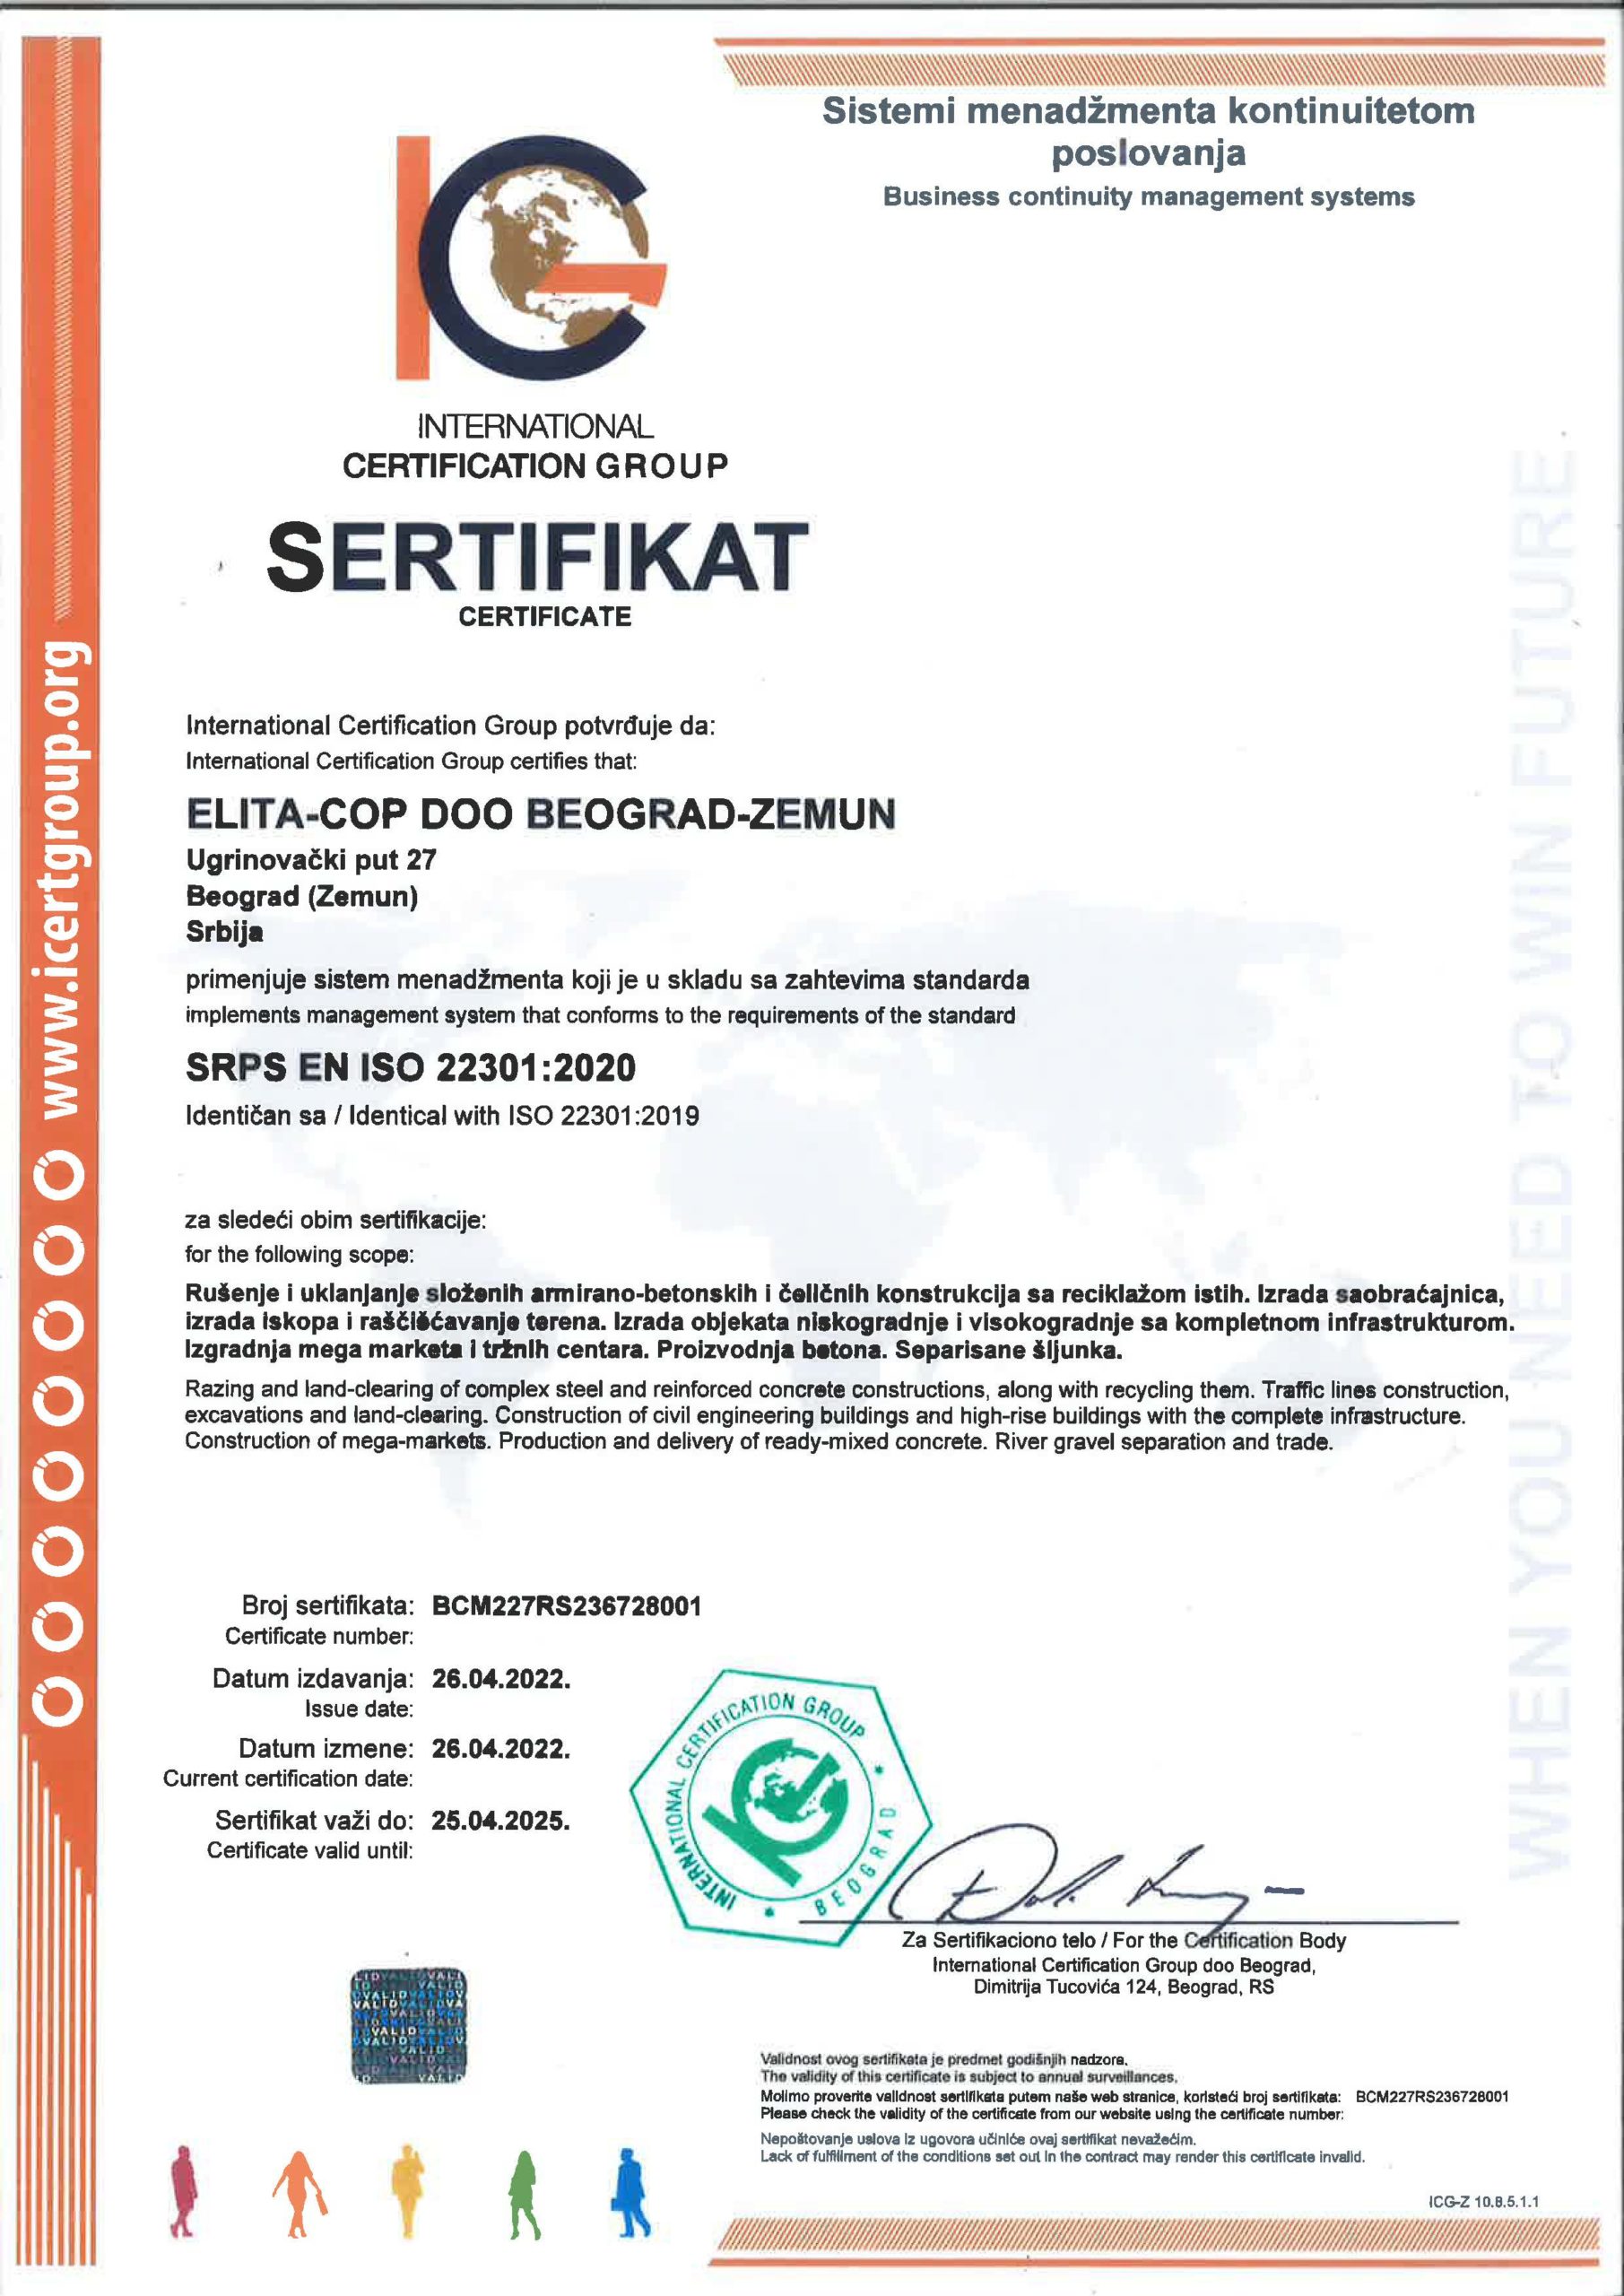 Novi sertifikat